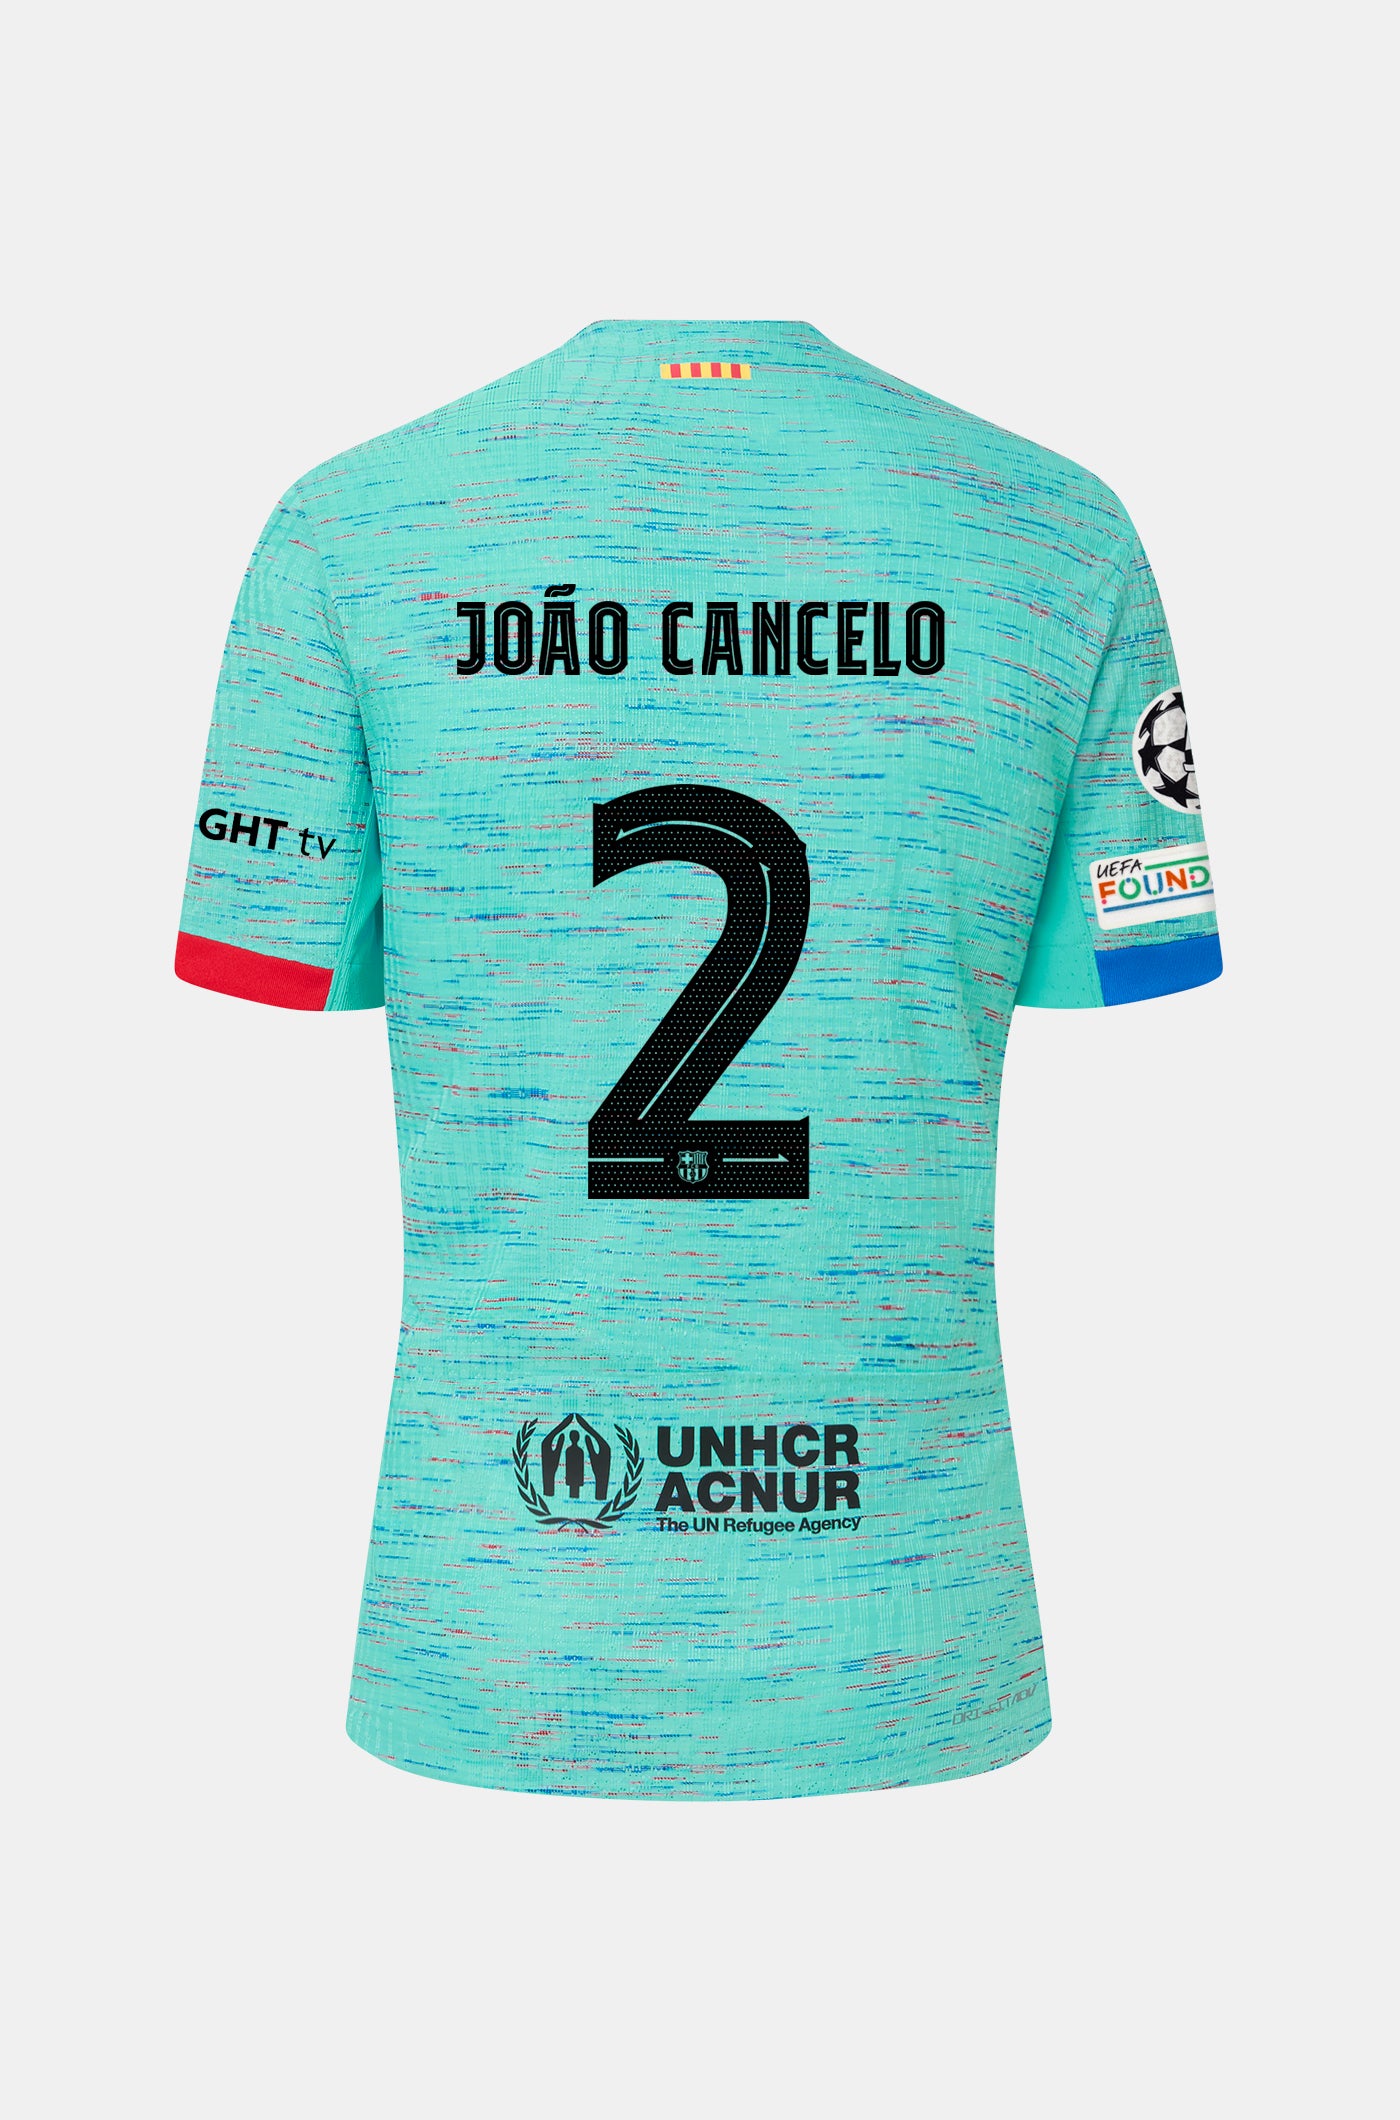 UCL FC Barcelona third shirt 23/24 Player’s Edition - JOÃO CANCELO